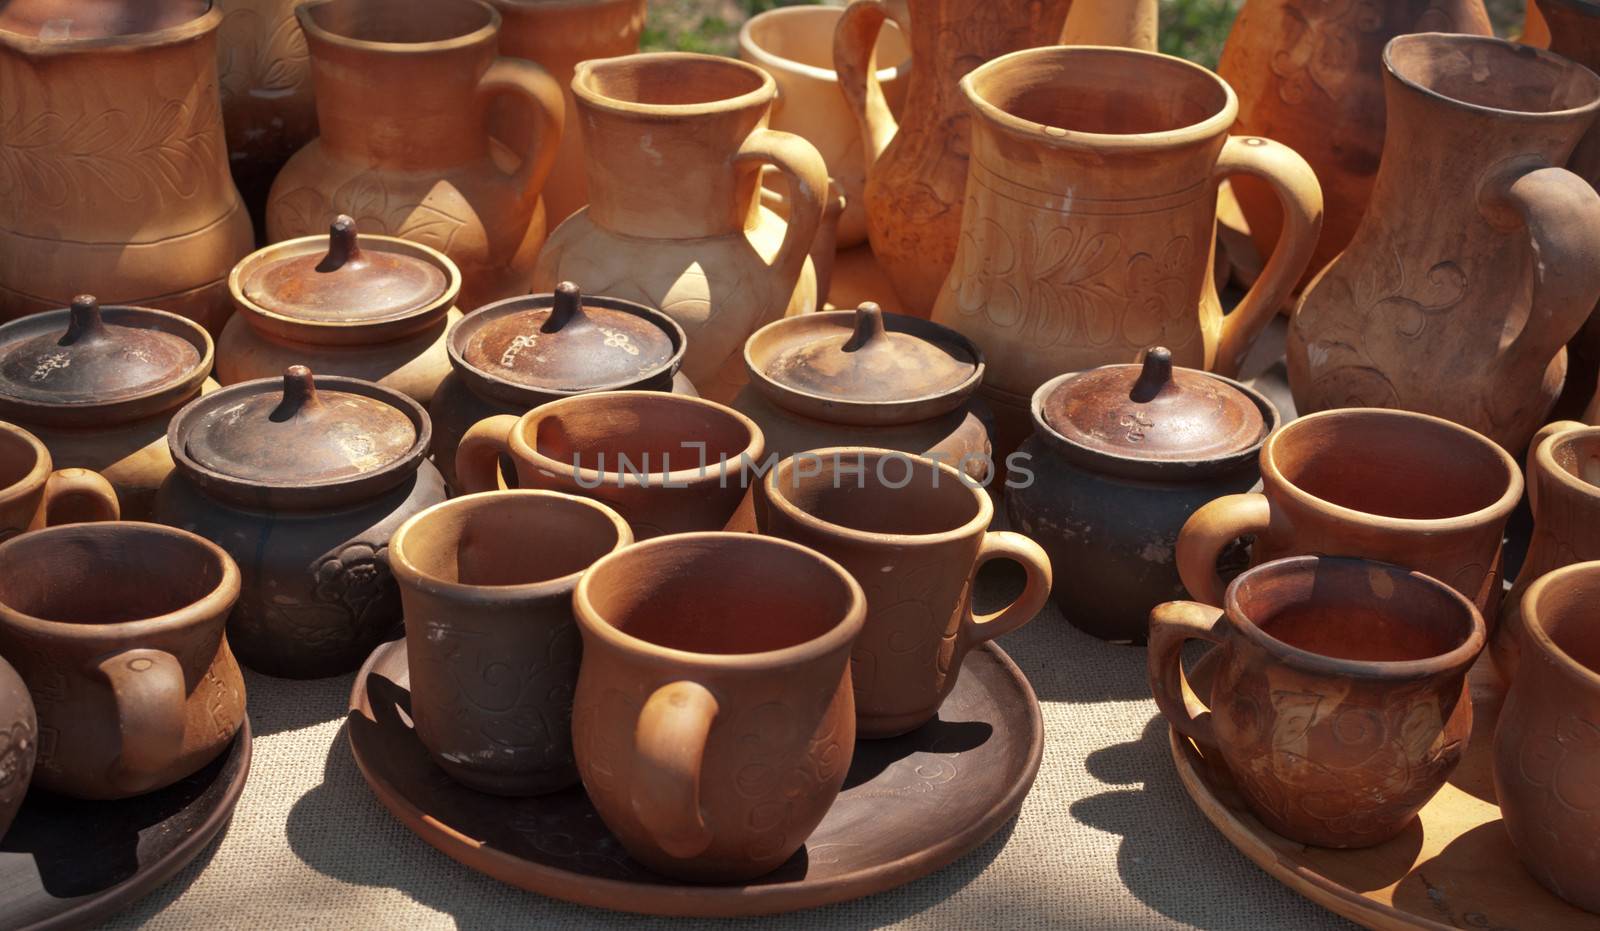 National Ukrainian authentic handmade pottery.